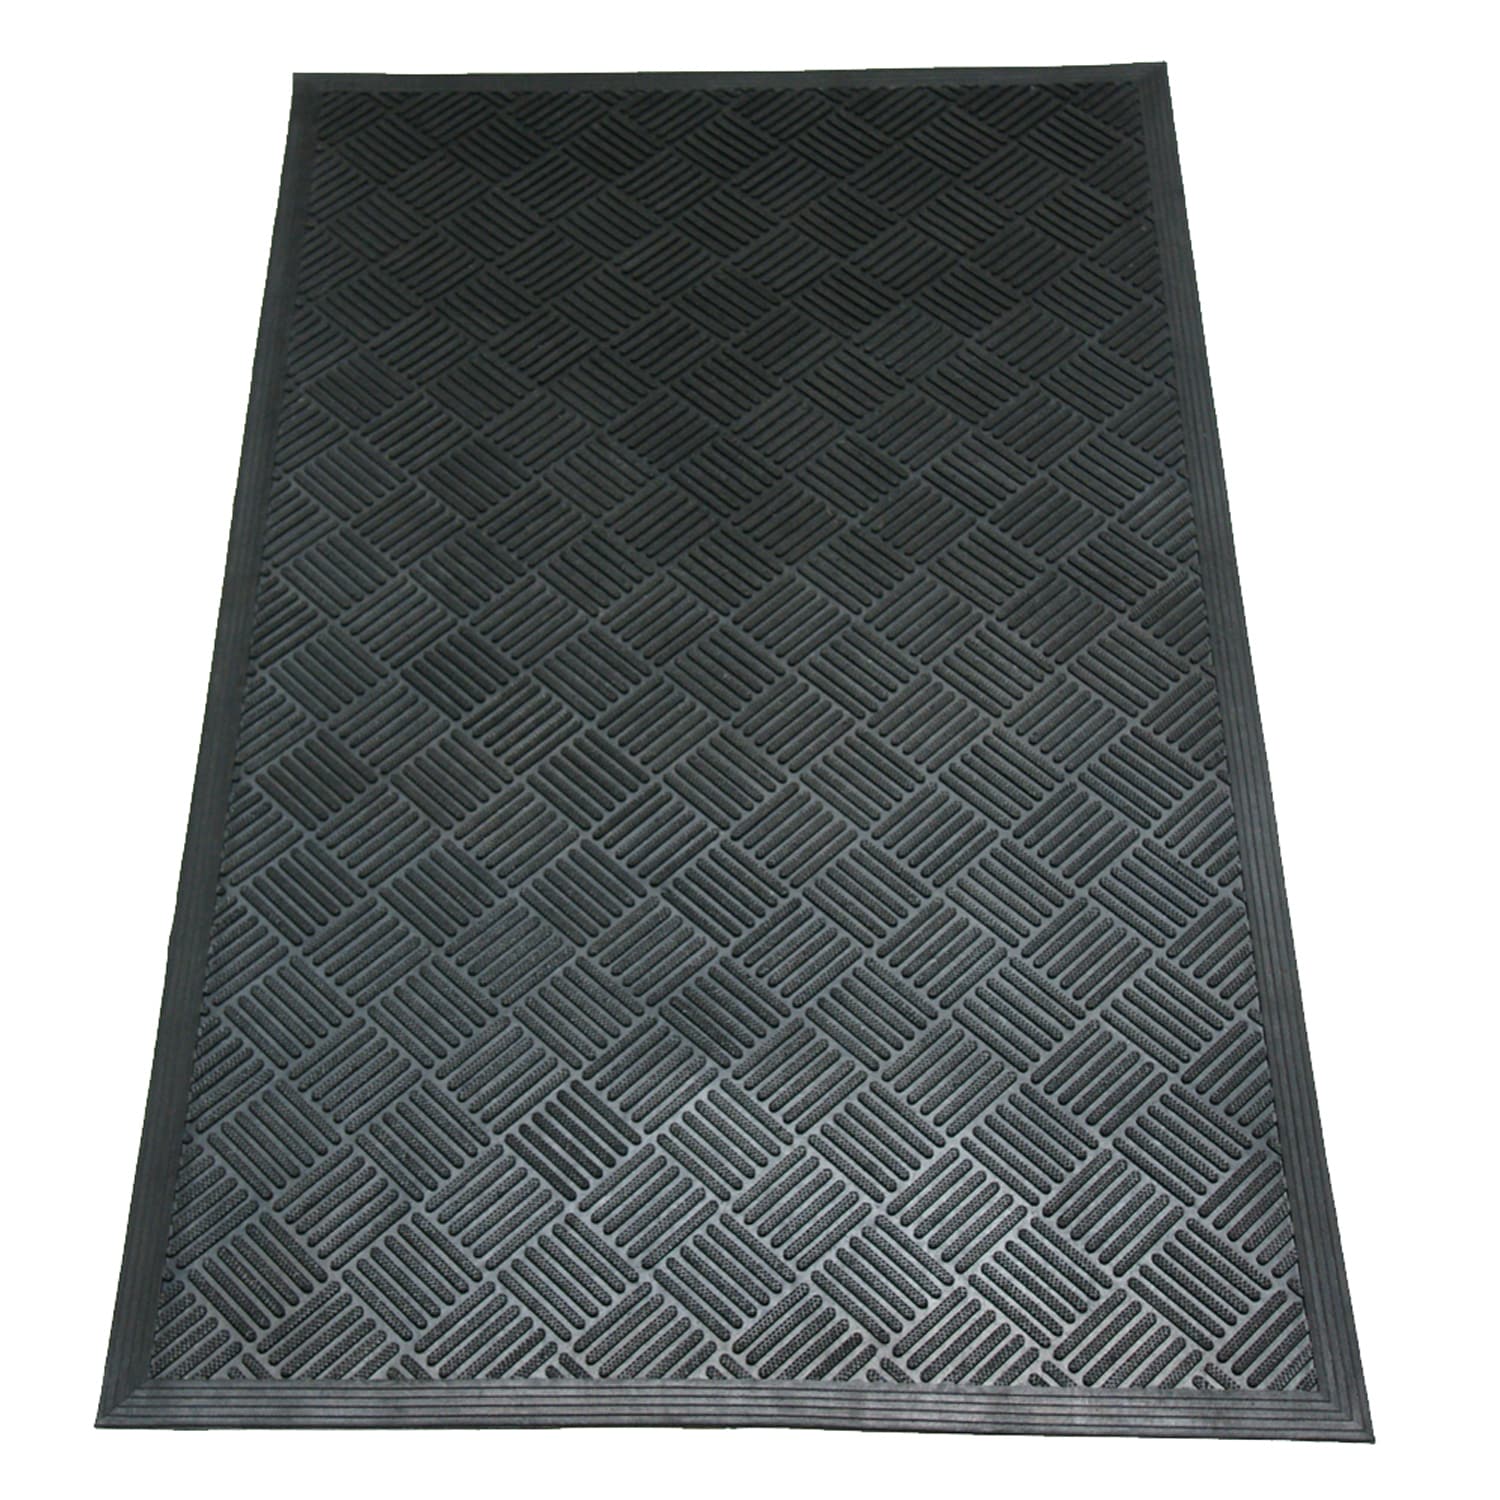 Choice 3' x 5' Black Rubber Ridge-Scraper Top Anti-Slip Safety Mat